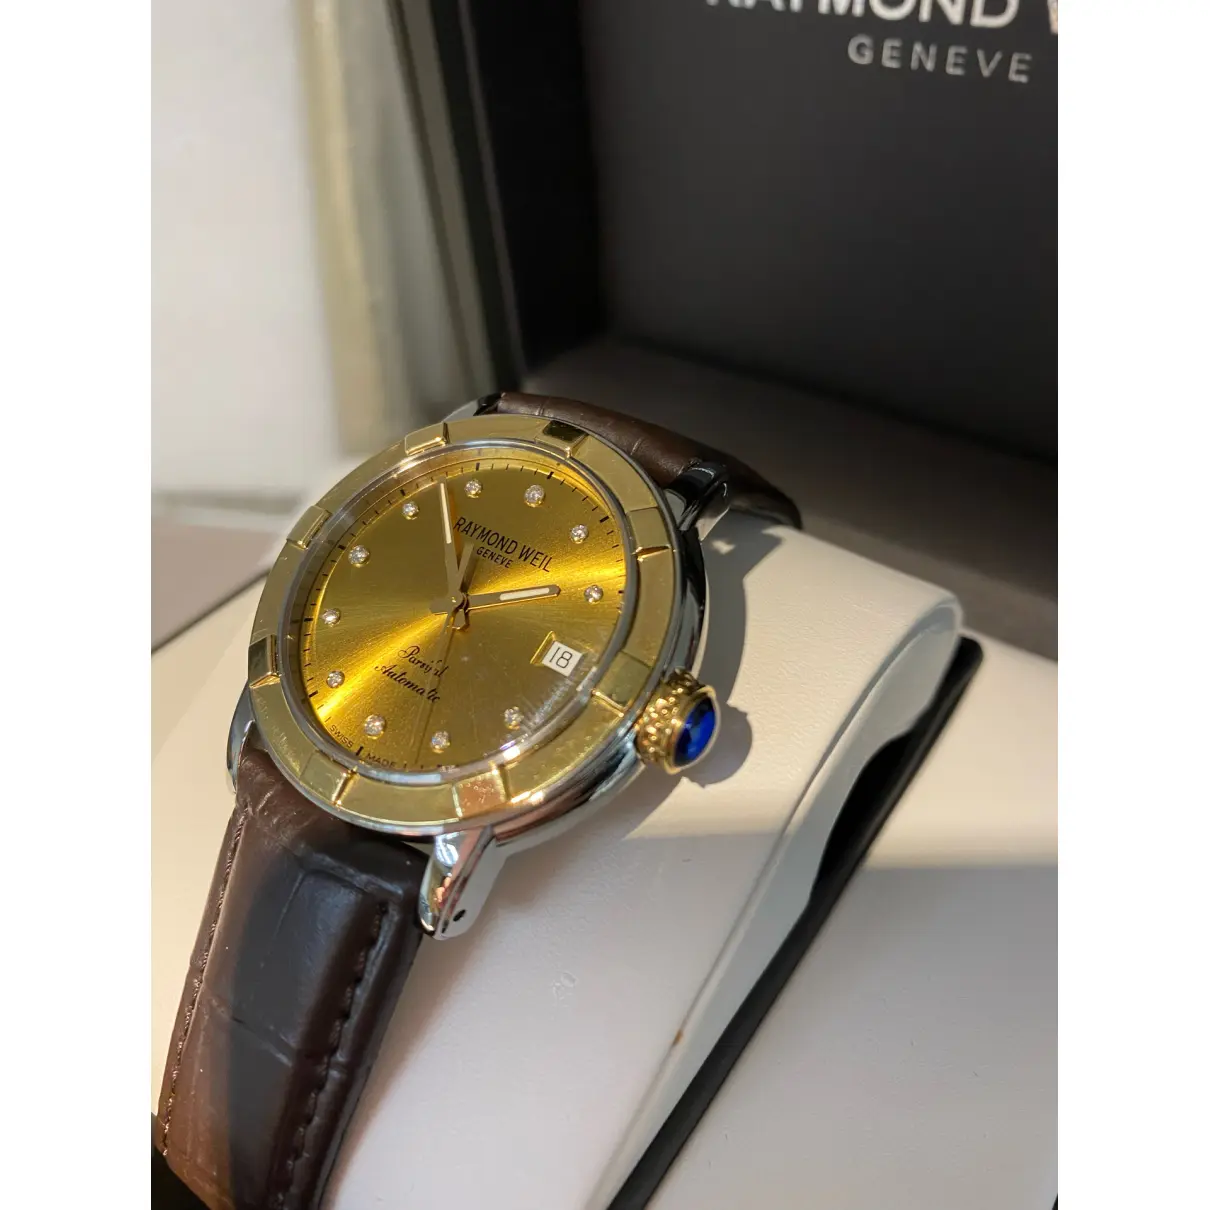 Yellow gold watch Raymond Weil